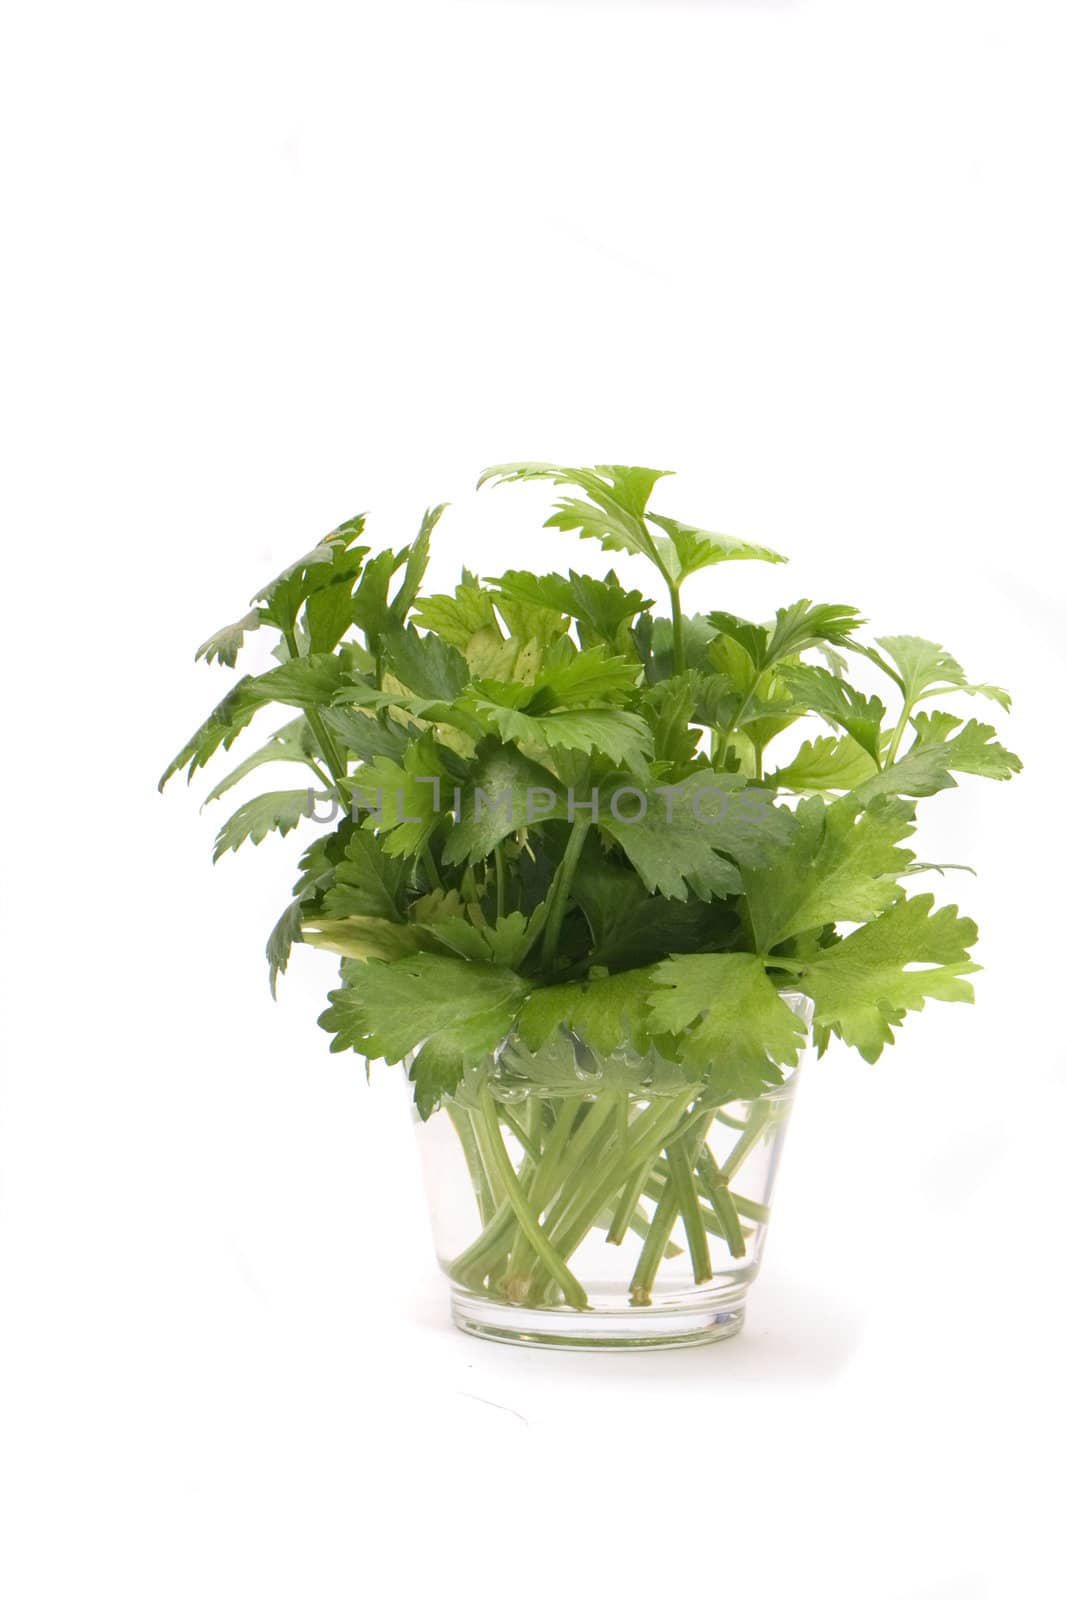 green herbs by jonnysek